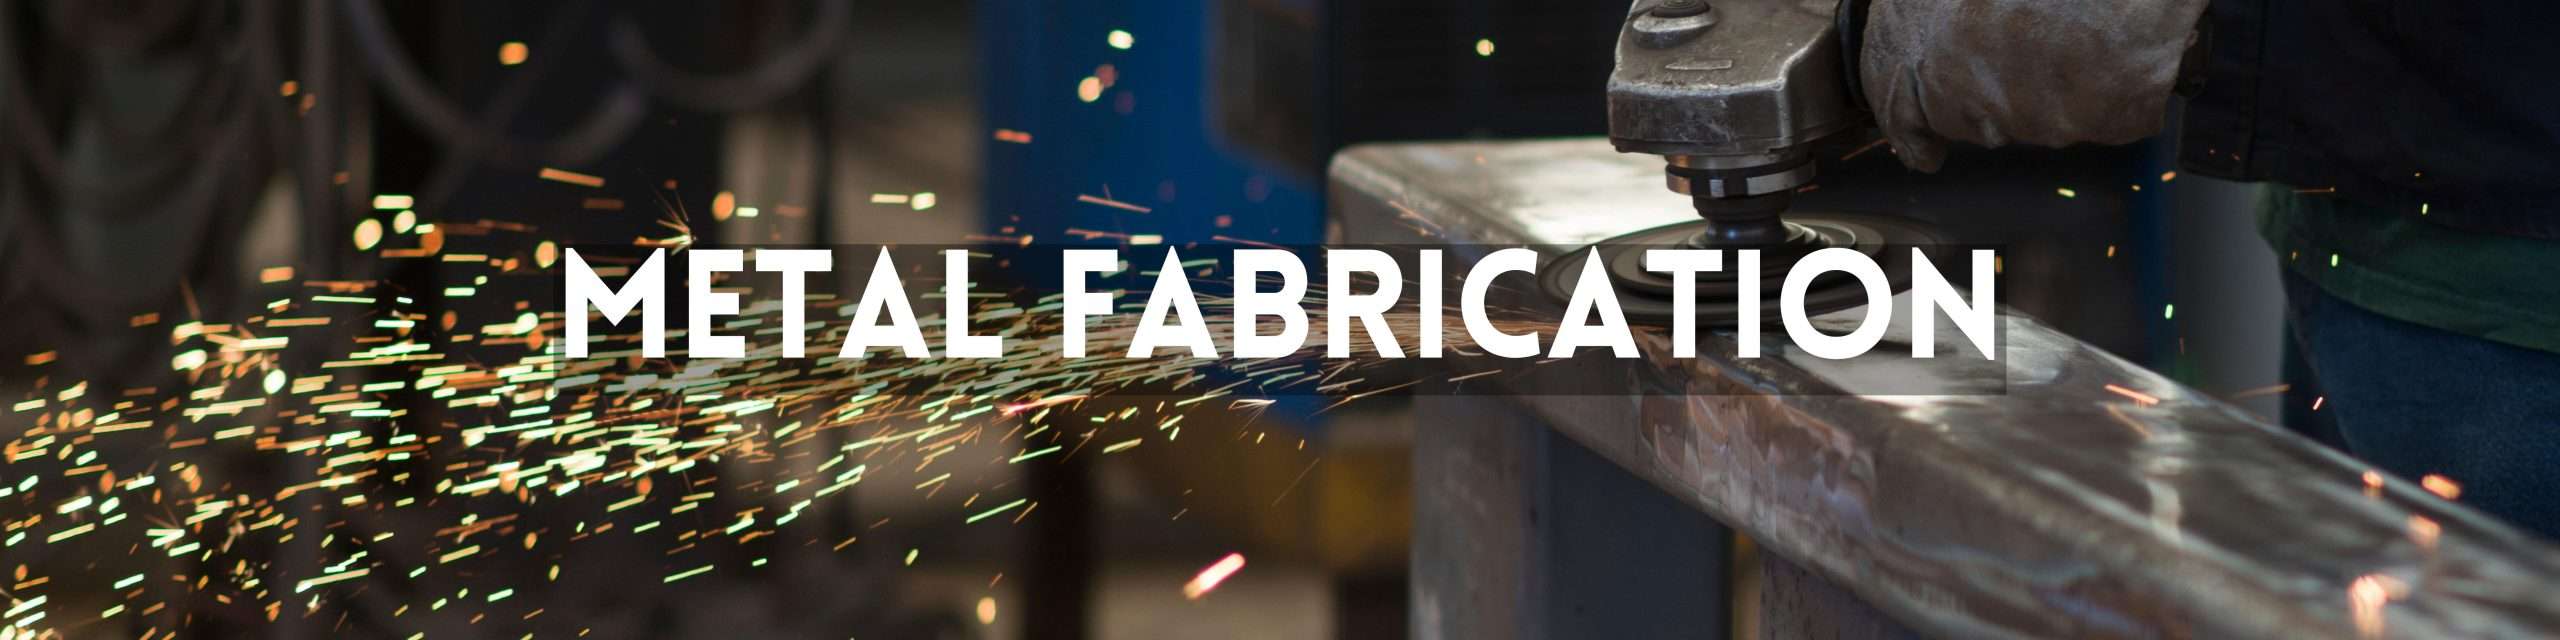 Sheet Metal Fabrication & Welding Services in Haryana